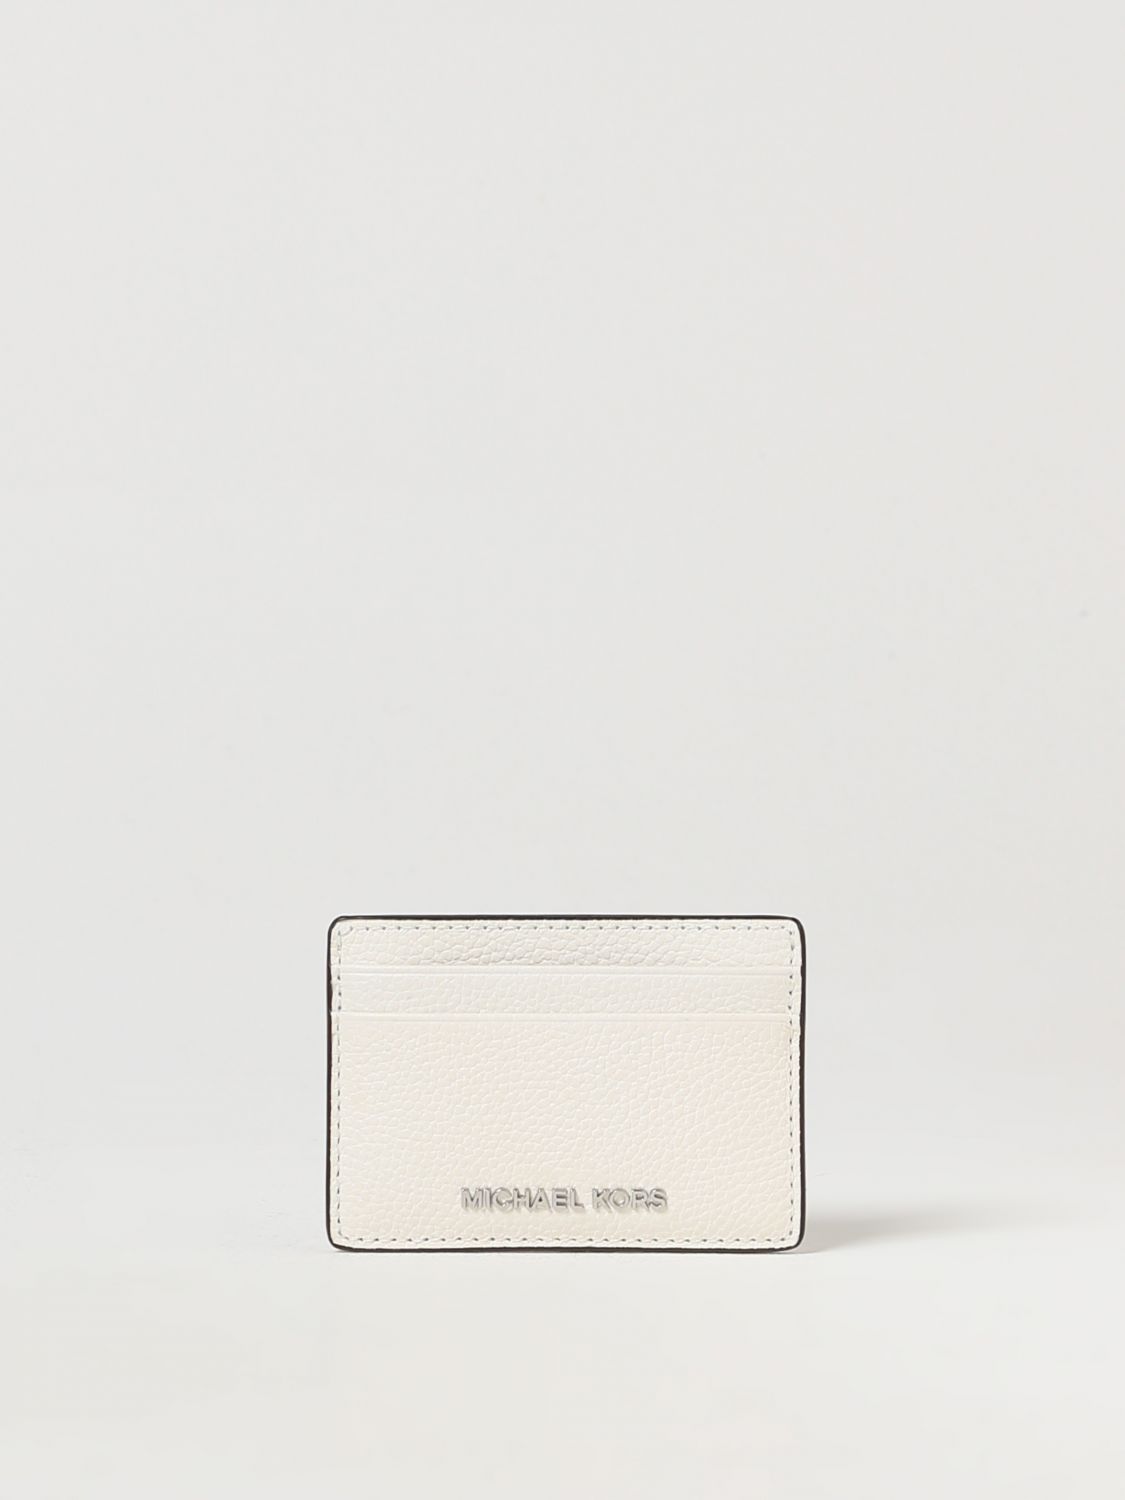 Michael Kors Wallet MICHAEL KORS Woman color White